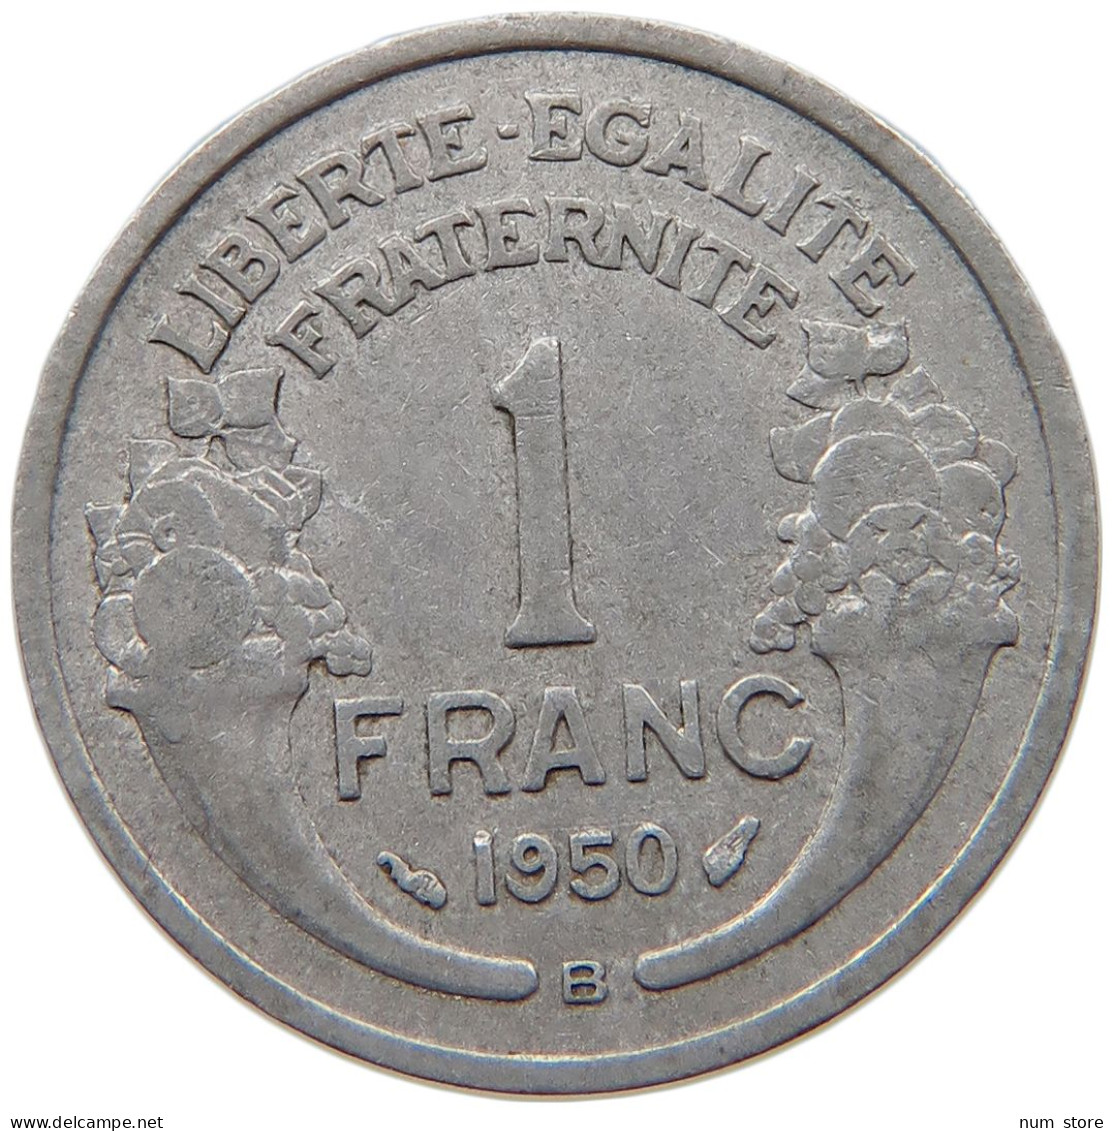 FRANCE 1 FRANC 1950 B #c060 0317 - 1 Franc